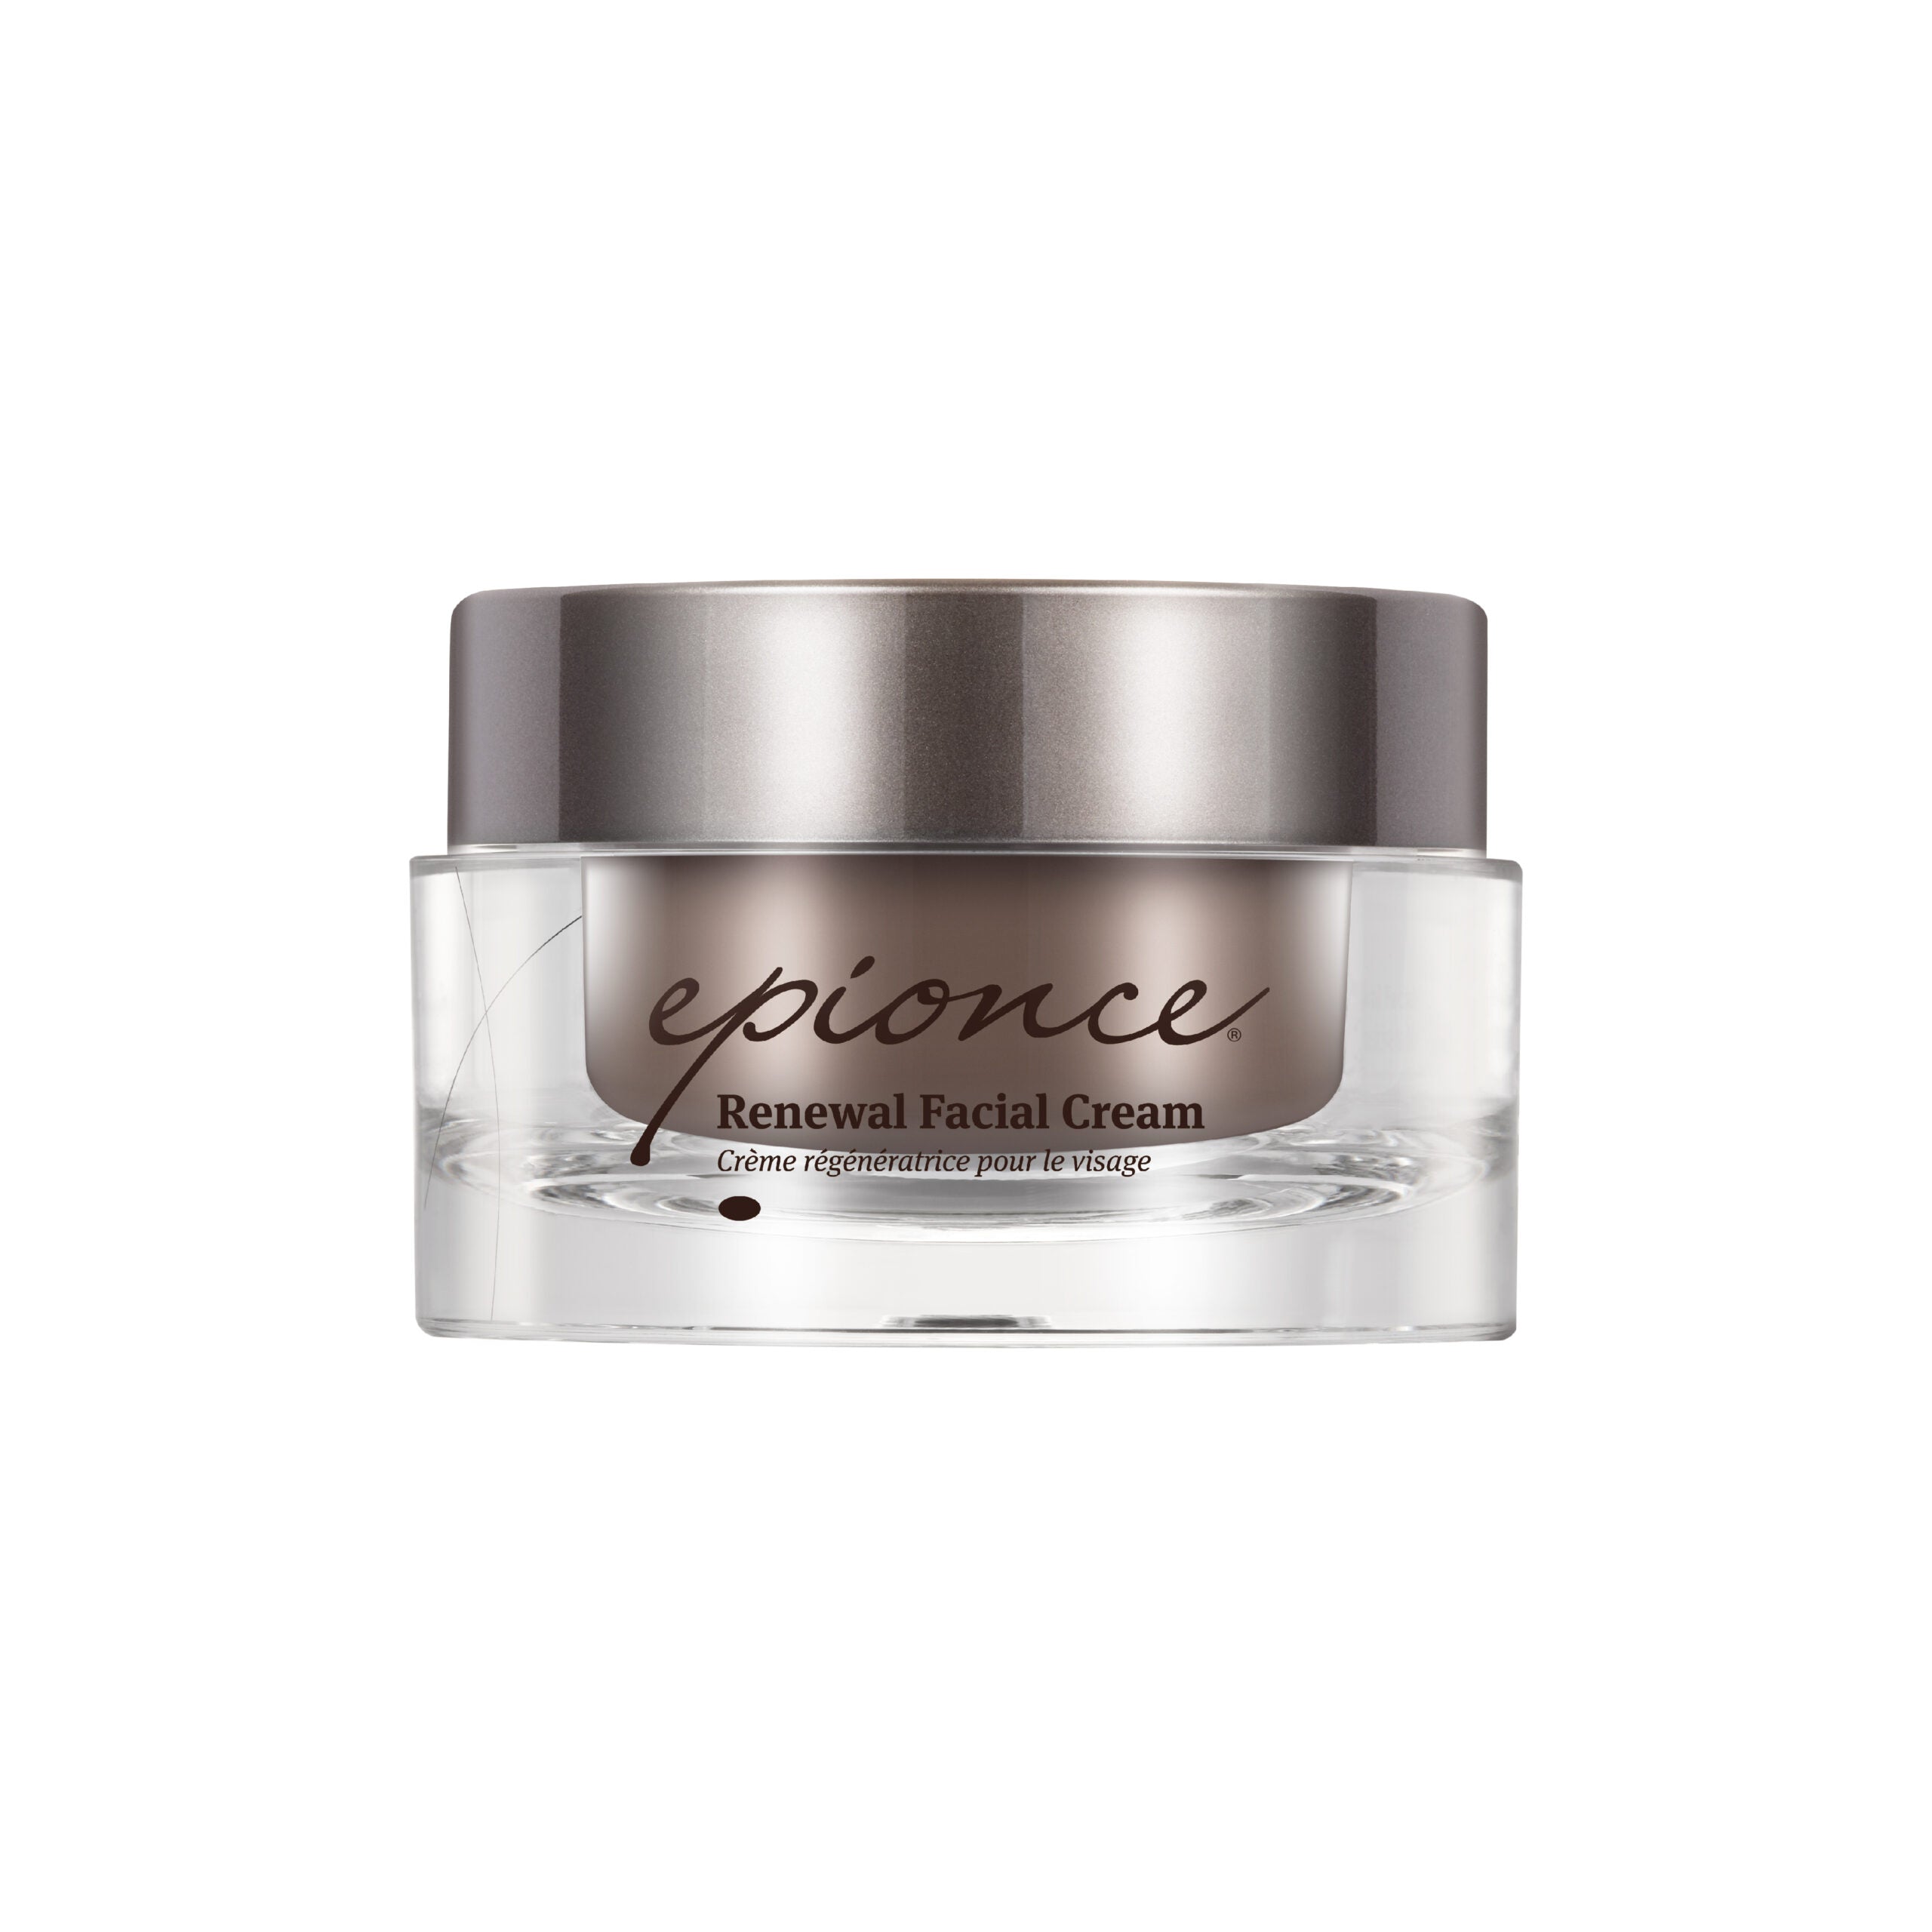 Epionce Skin Renewal Facial Cream｜Renewal Facial Cream - For Dry/ Sensitive to Normal Skin 50g